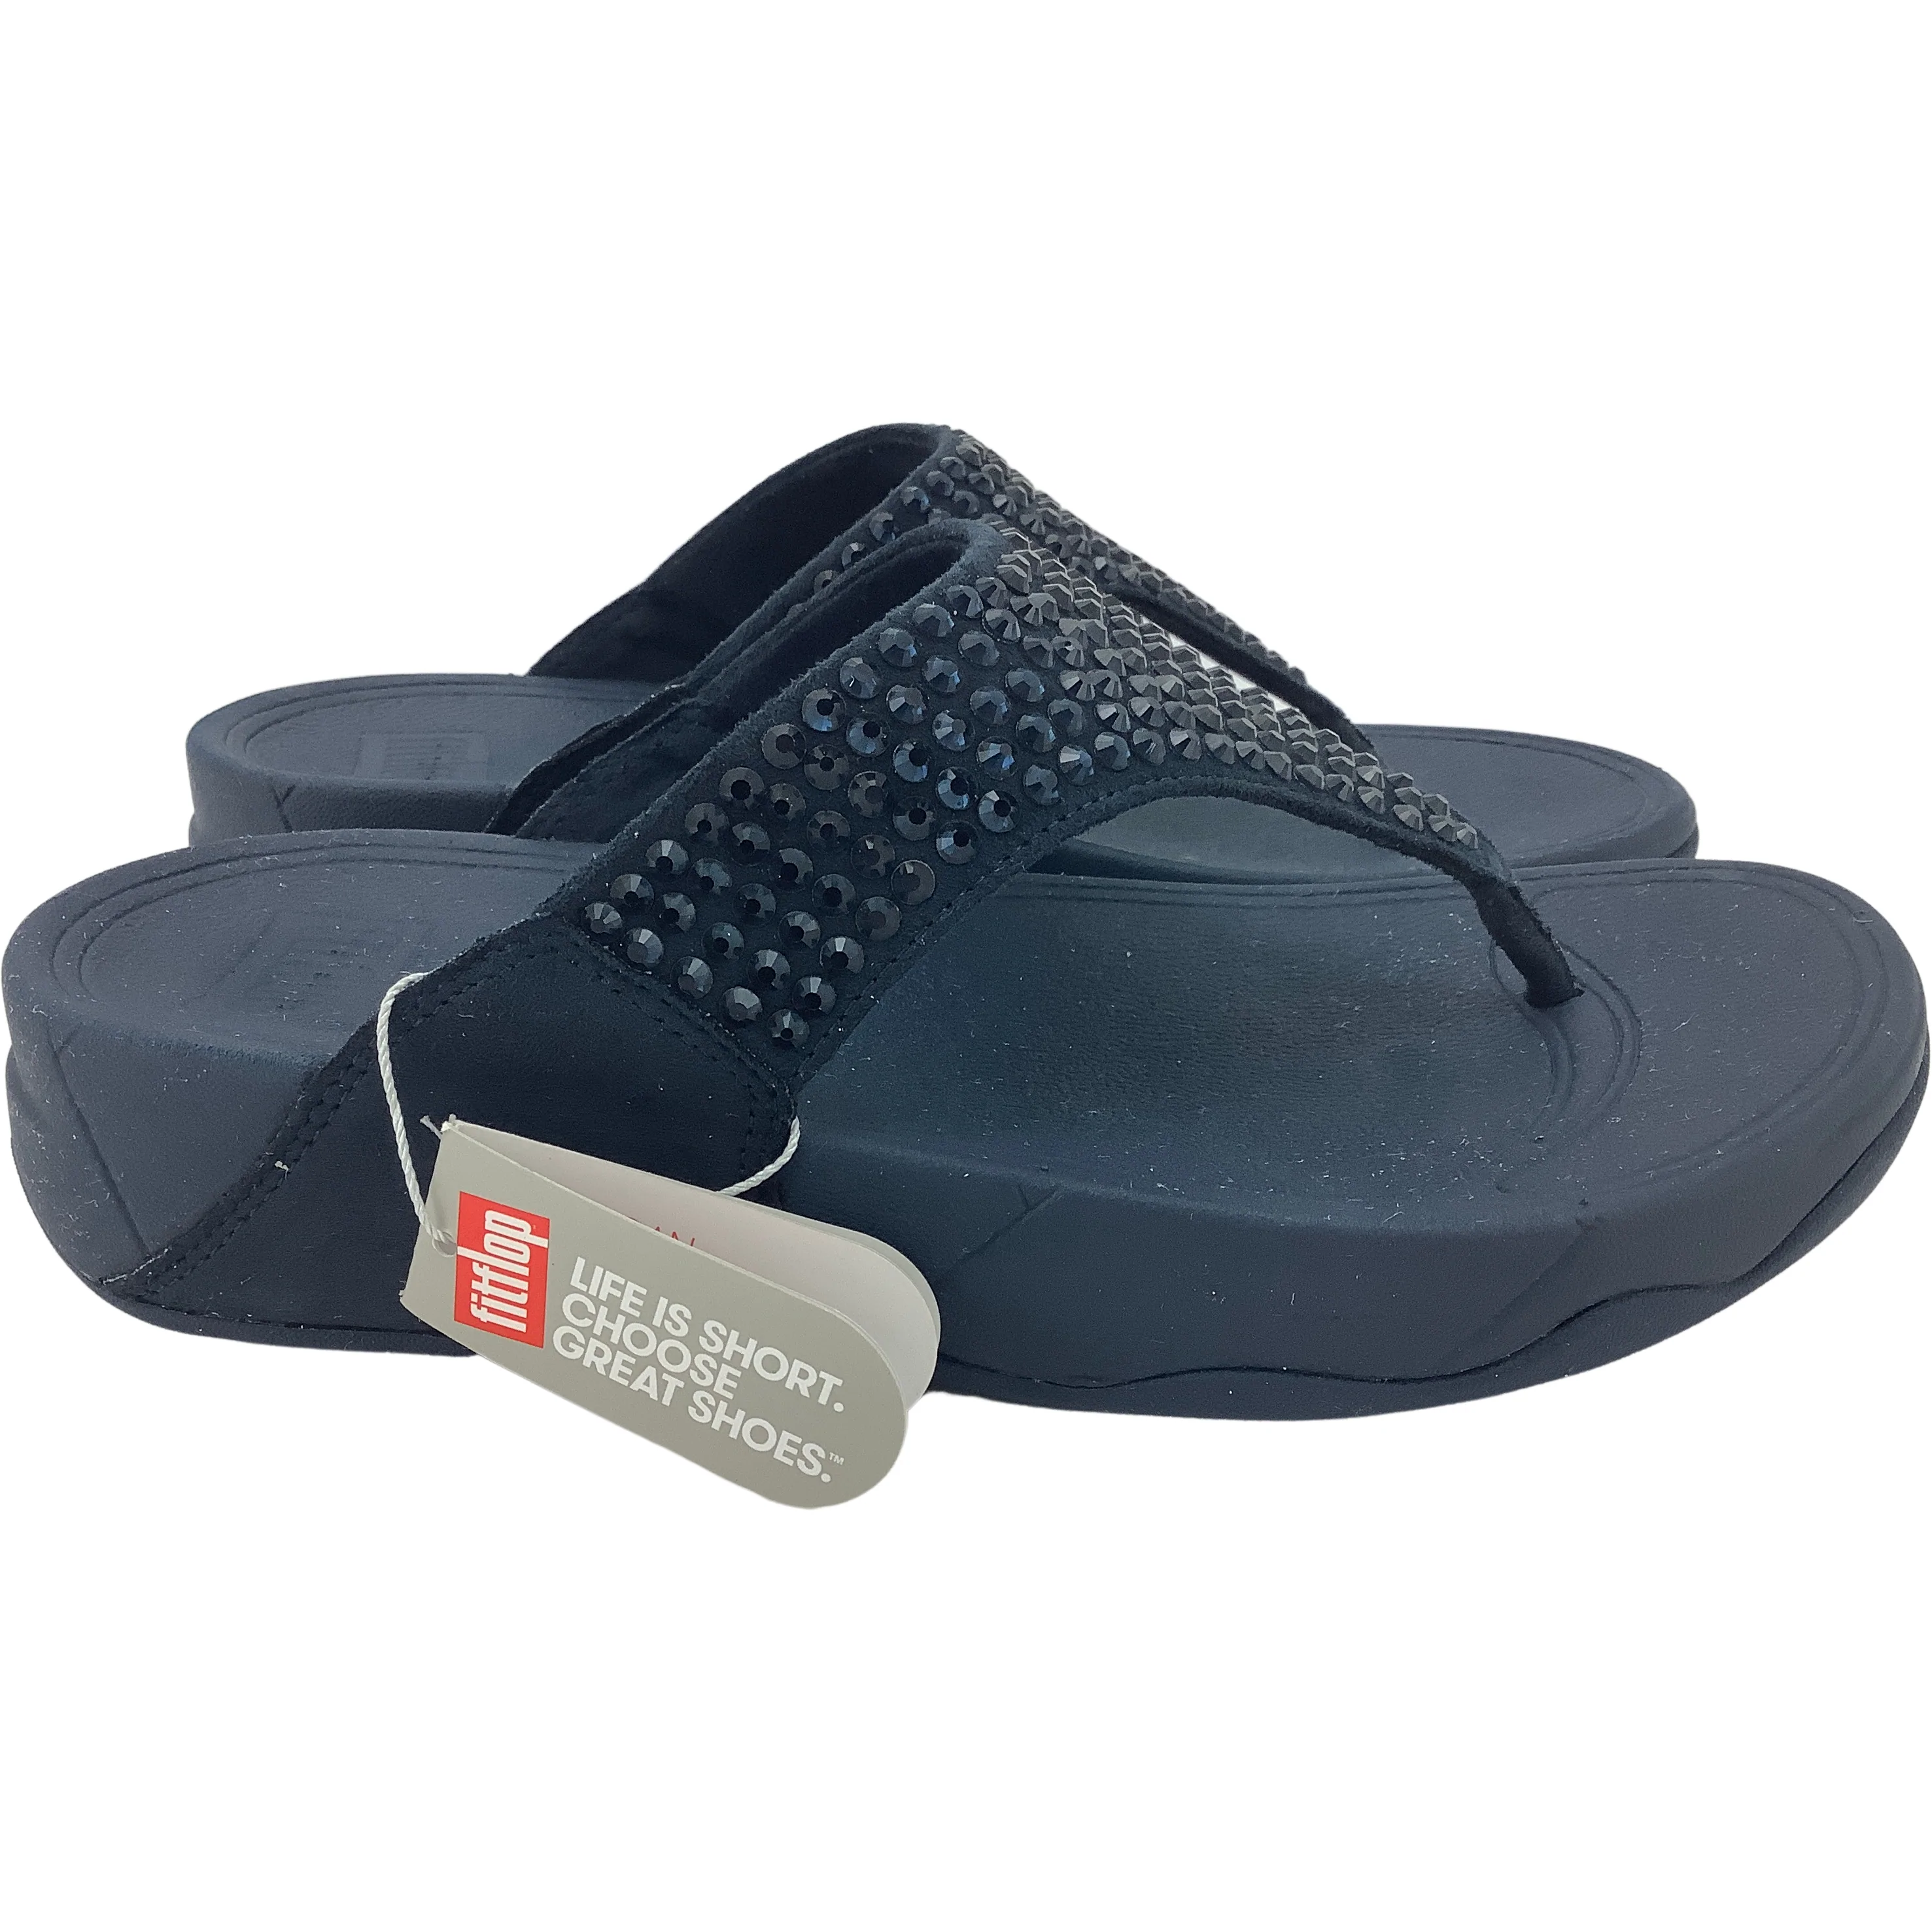 FitFlop Women's Flip Flops / Navy with Gems / Women's Sandals / Size 7